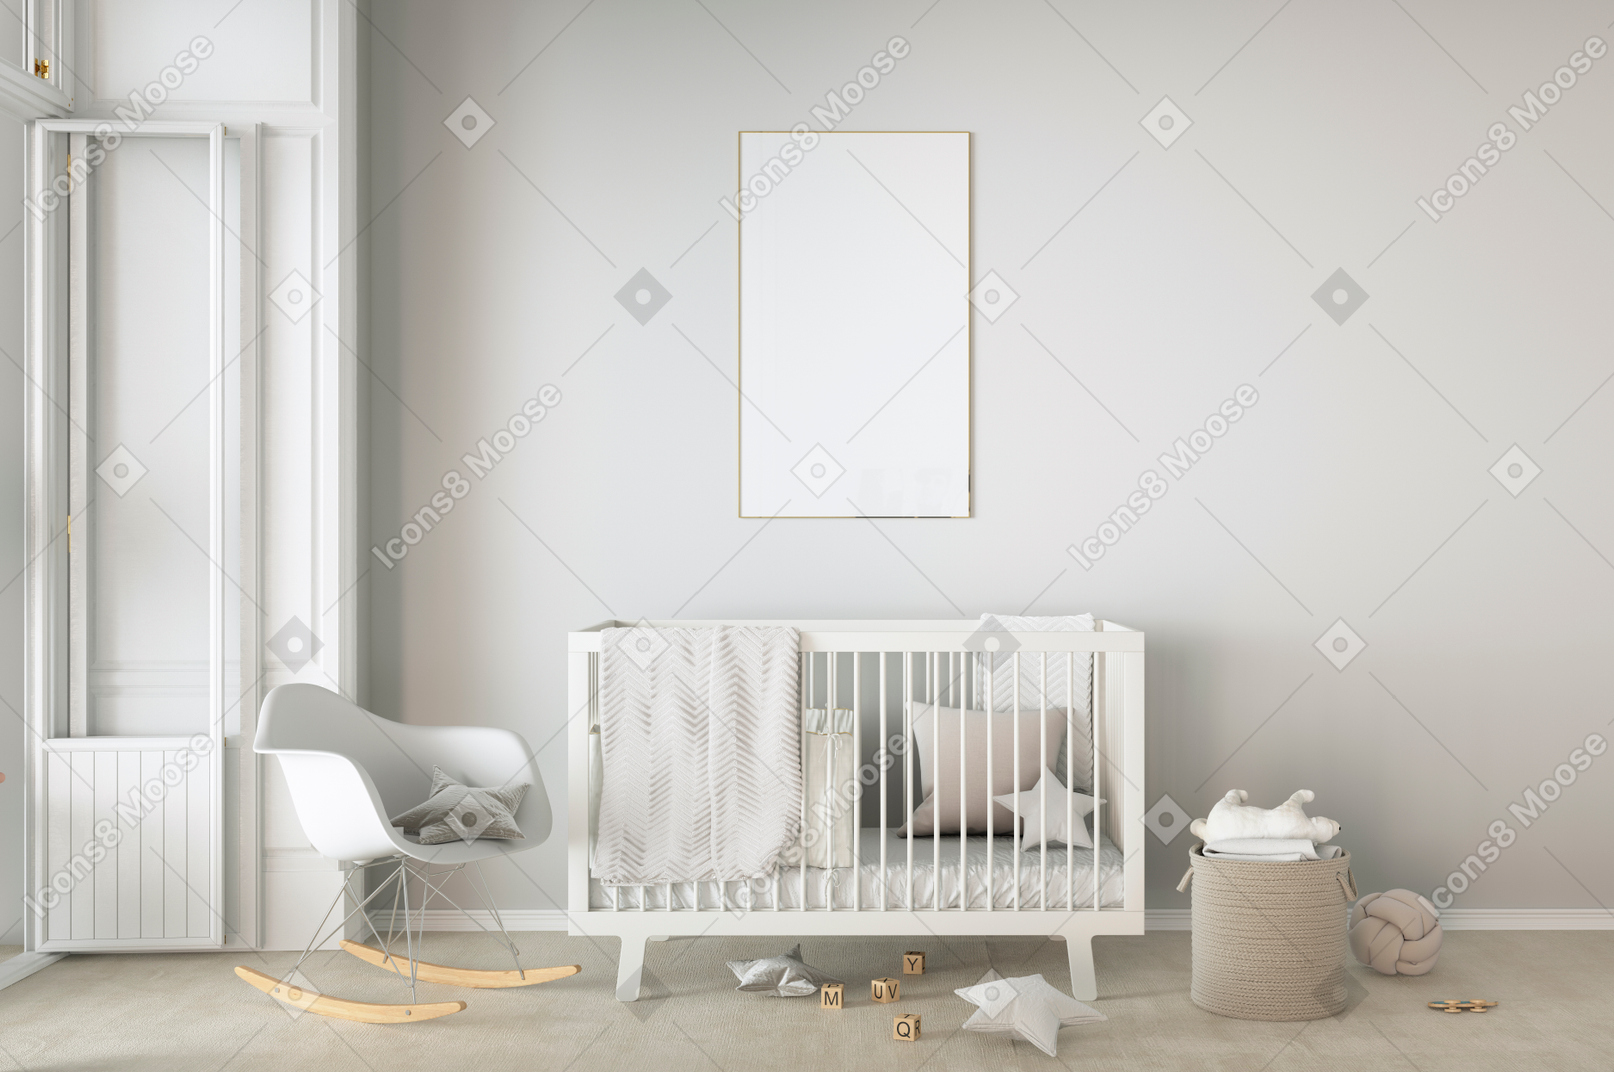 Nursery room with crib and rocking chair